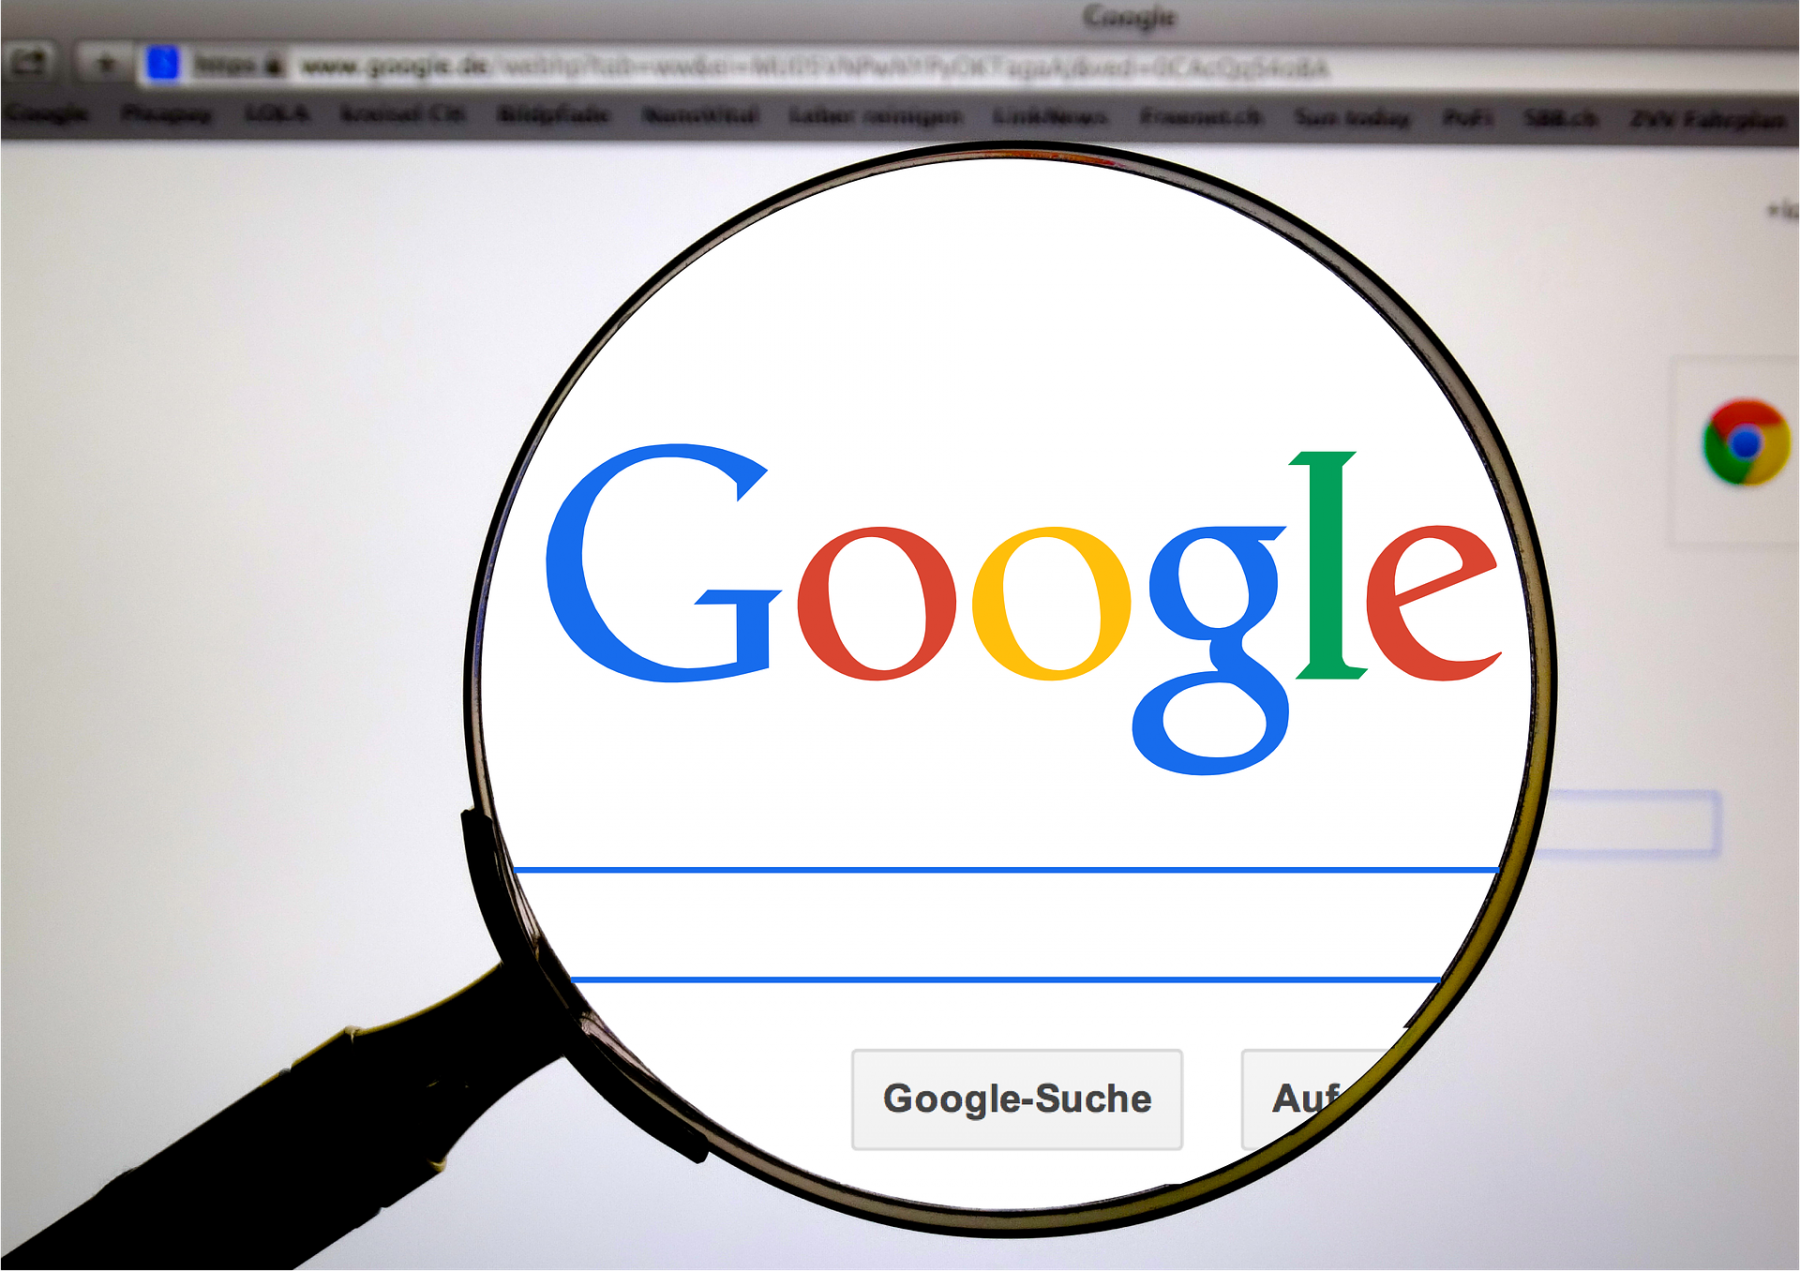 Google ευφυΐα: Όσοι αναζητούν τις απαντήσεις ίσως έχουν διογκωμένη αίσθηση ευφυΐας